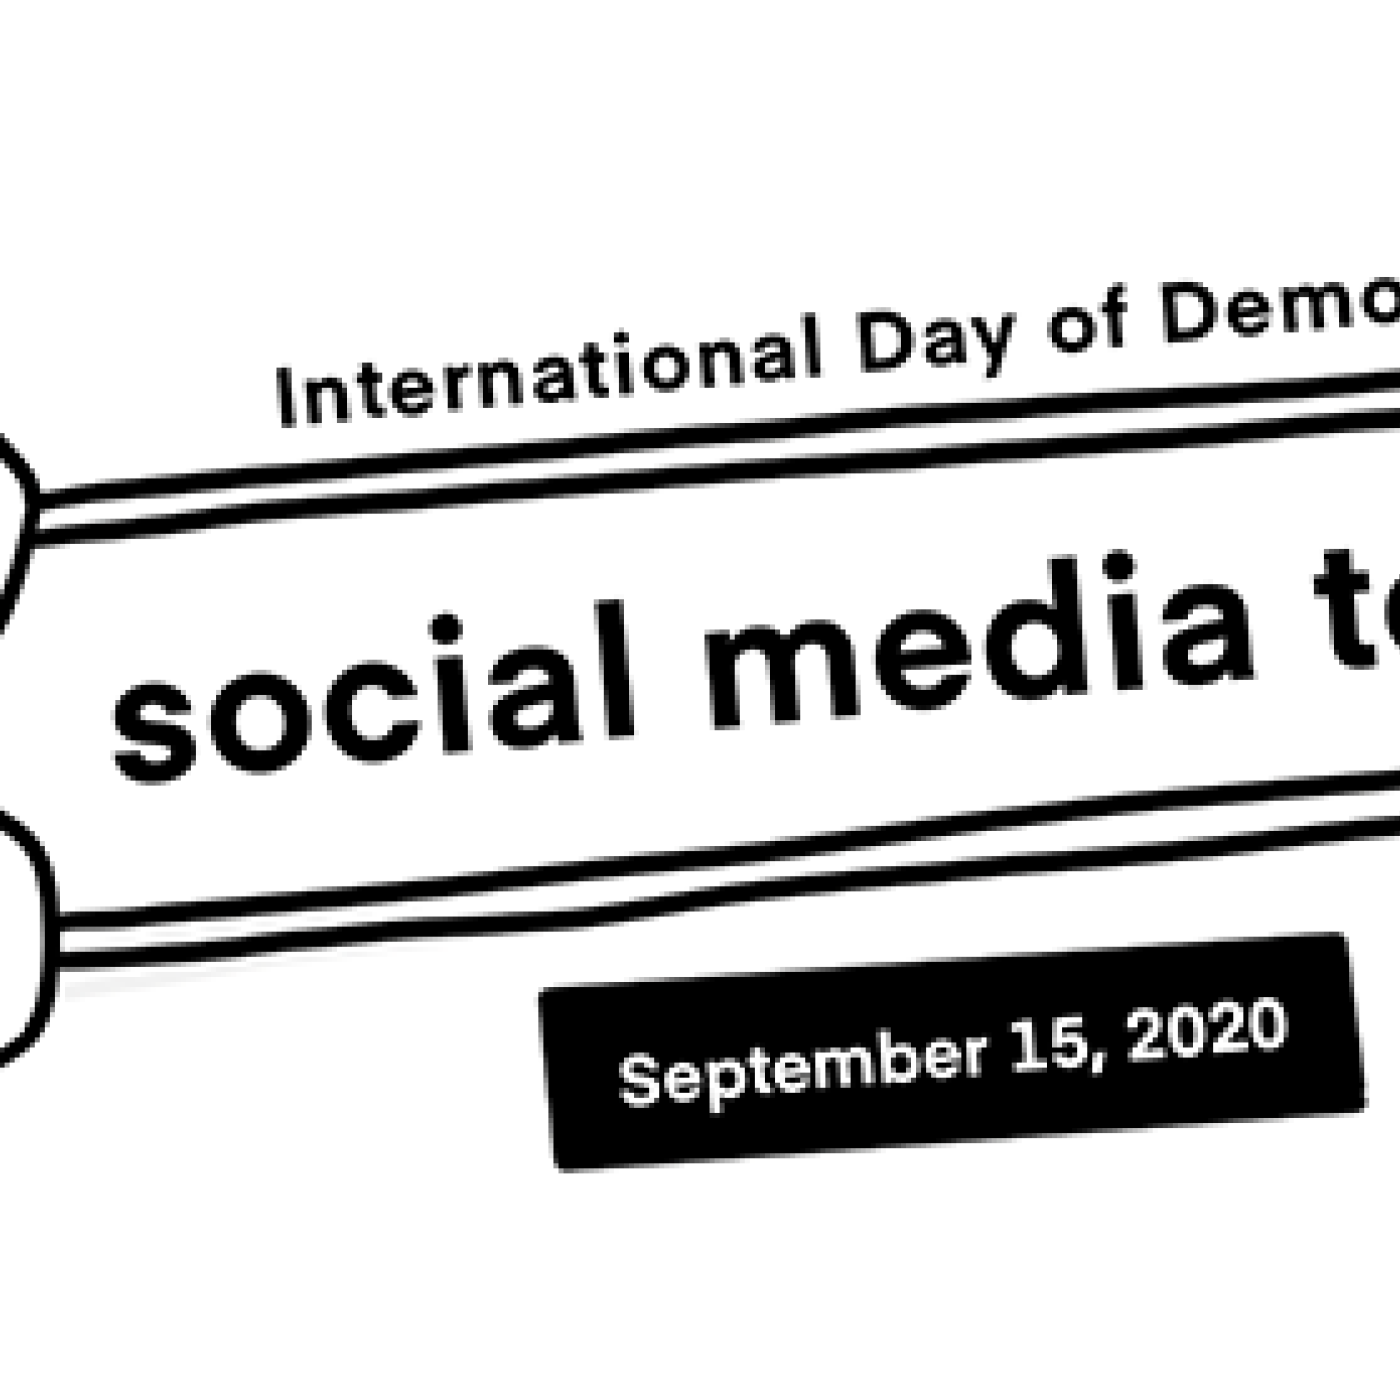 International Day of Democracy | social media toolkit | September 15, 2020